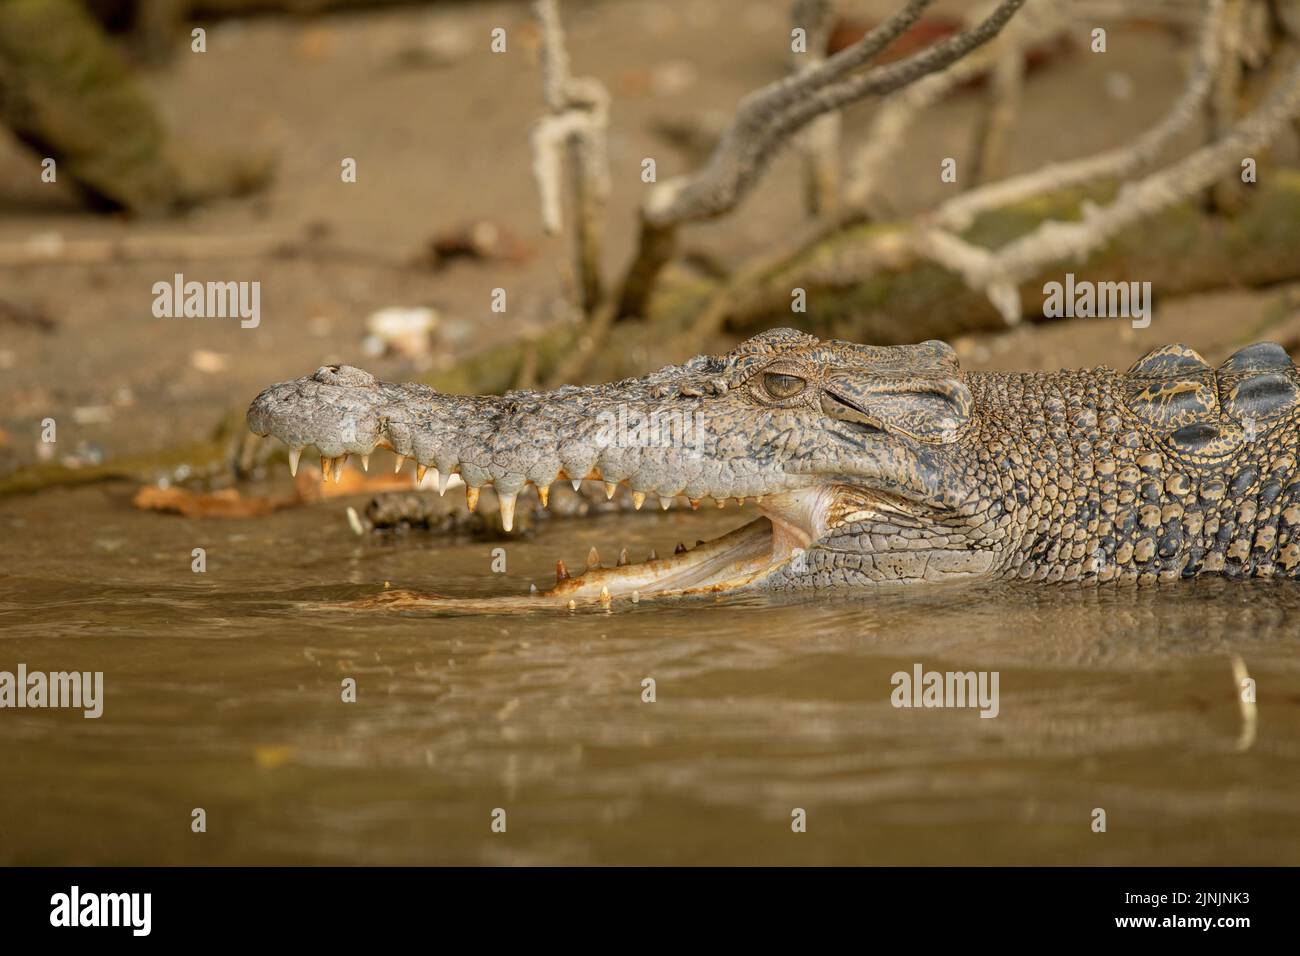 Cocodrilo de agua salada, cocodrilo estuarino (Crocodylus porosus), retrato con la boca abierta, Australia, Territorio del Norte, Kakadu Nationalpark Foto de stock